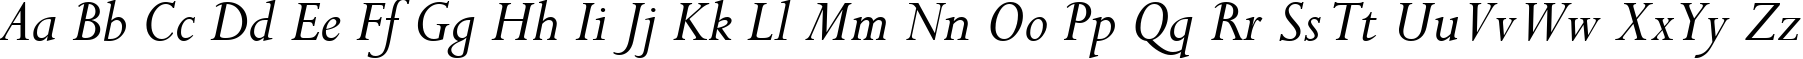 Пример написания английского алфавита шрифтом Perpetua Italic